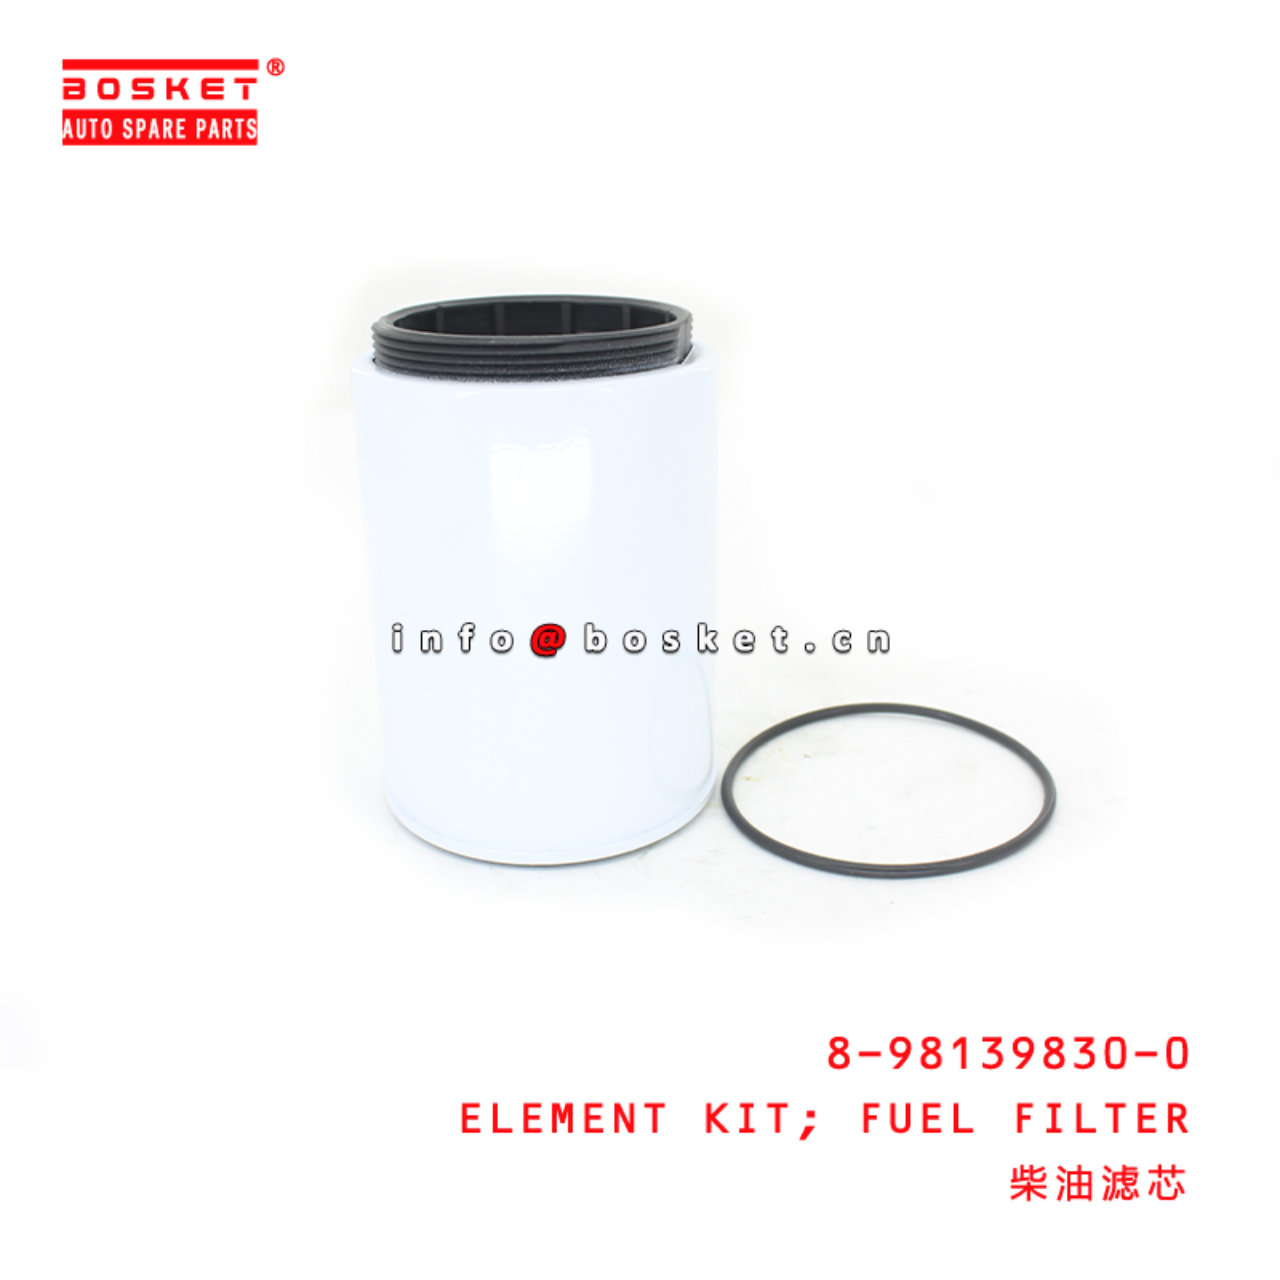 8-98139830-0 Fuel Filter Element KIT suitable for ISUZU NMR85 NPR75 NQR90  8981398300